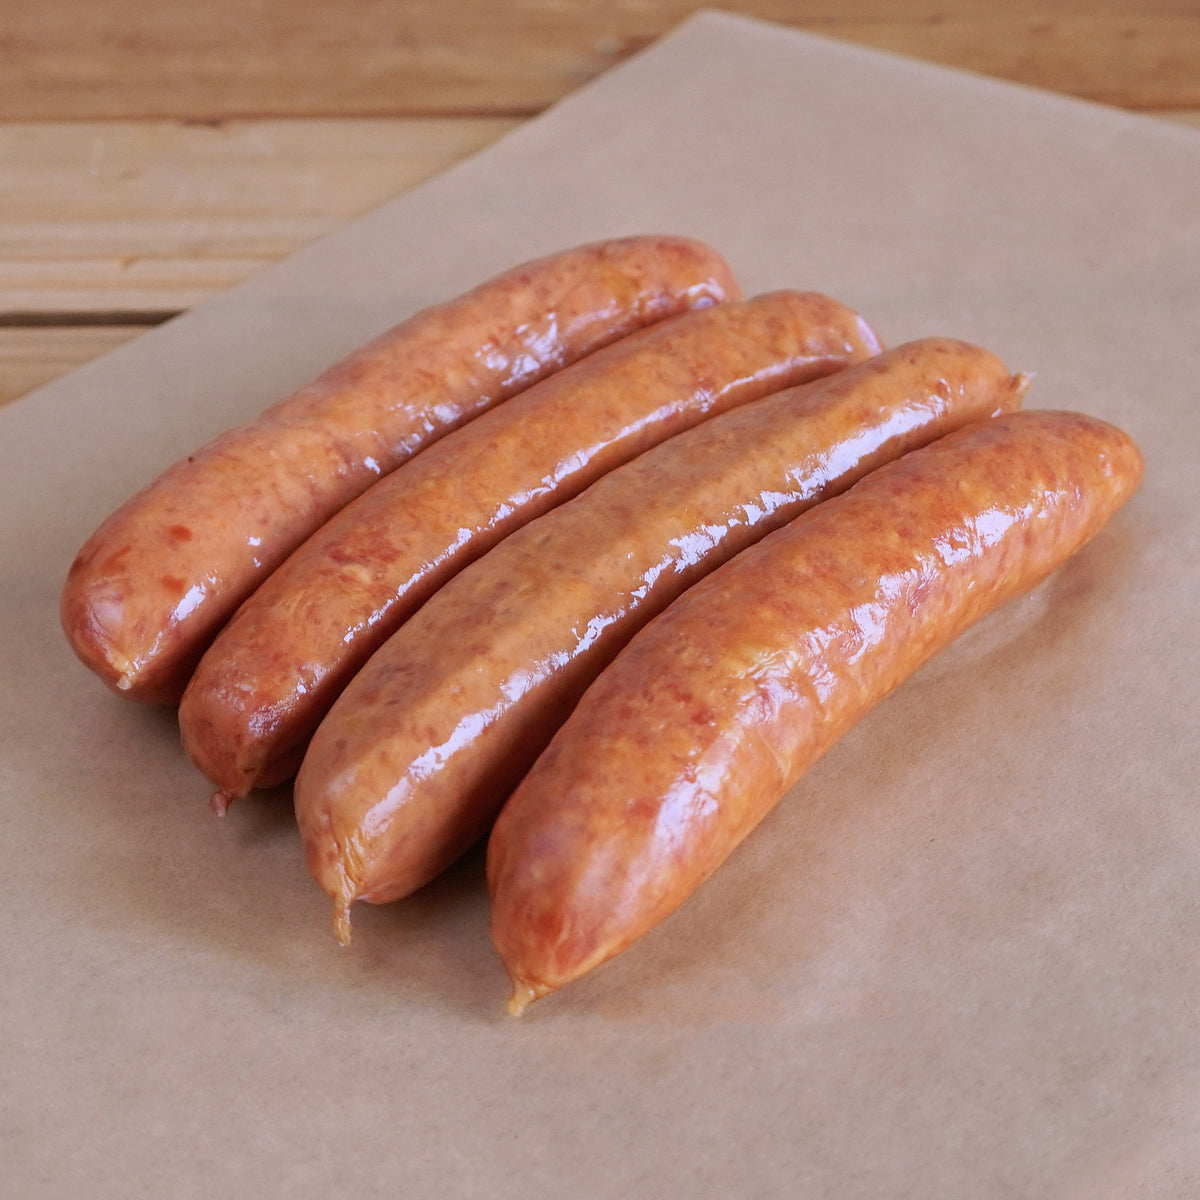 All-Natural Free-Range Kurobuta Uncured Smoked Pork Sausages from Iowa (4pc) - Horizon Farms